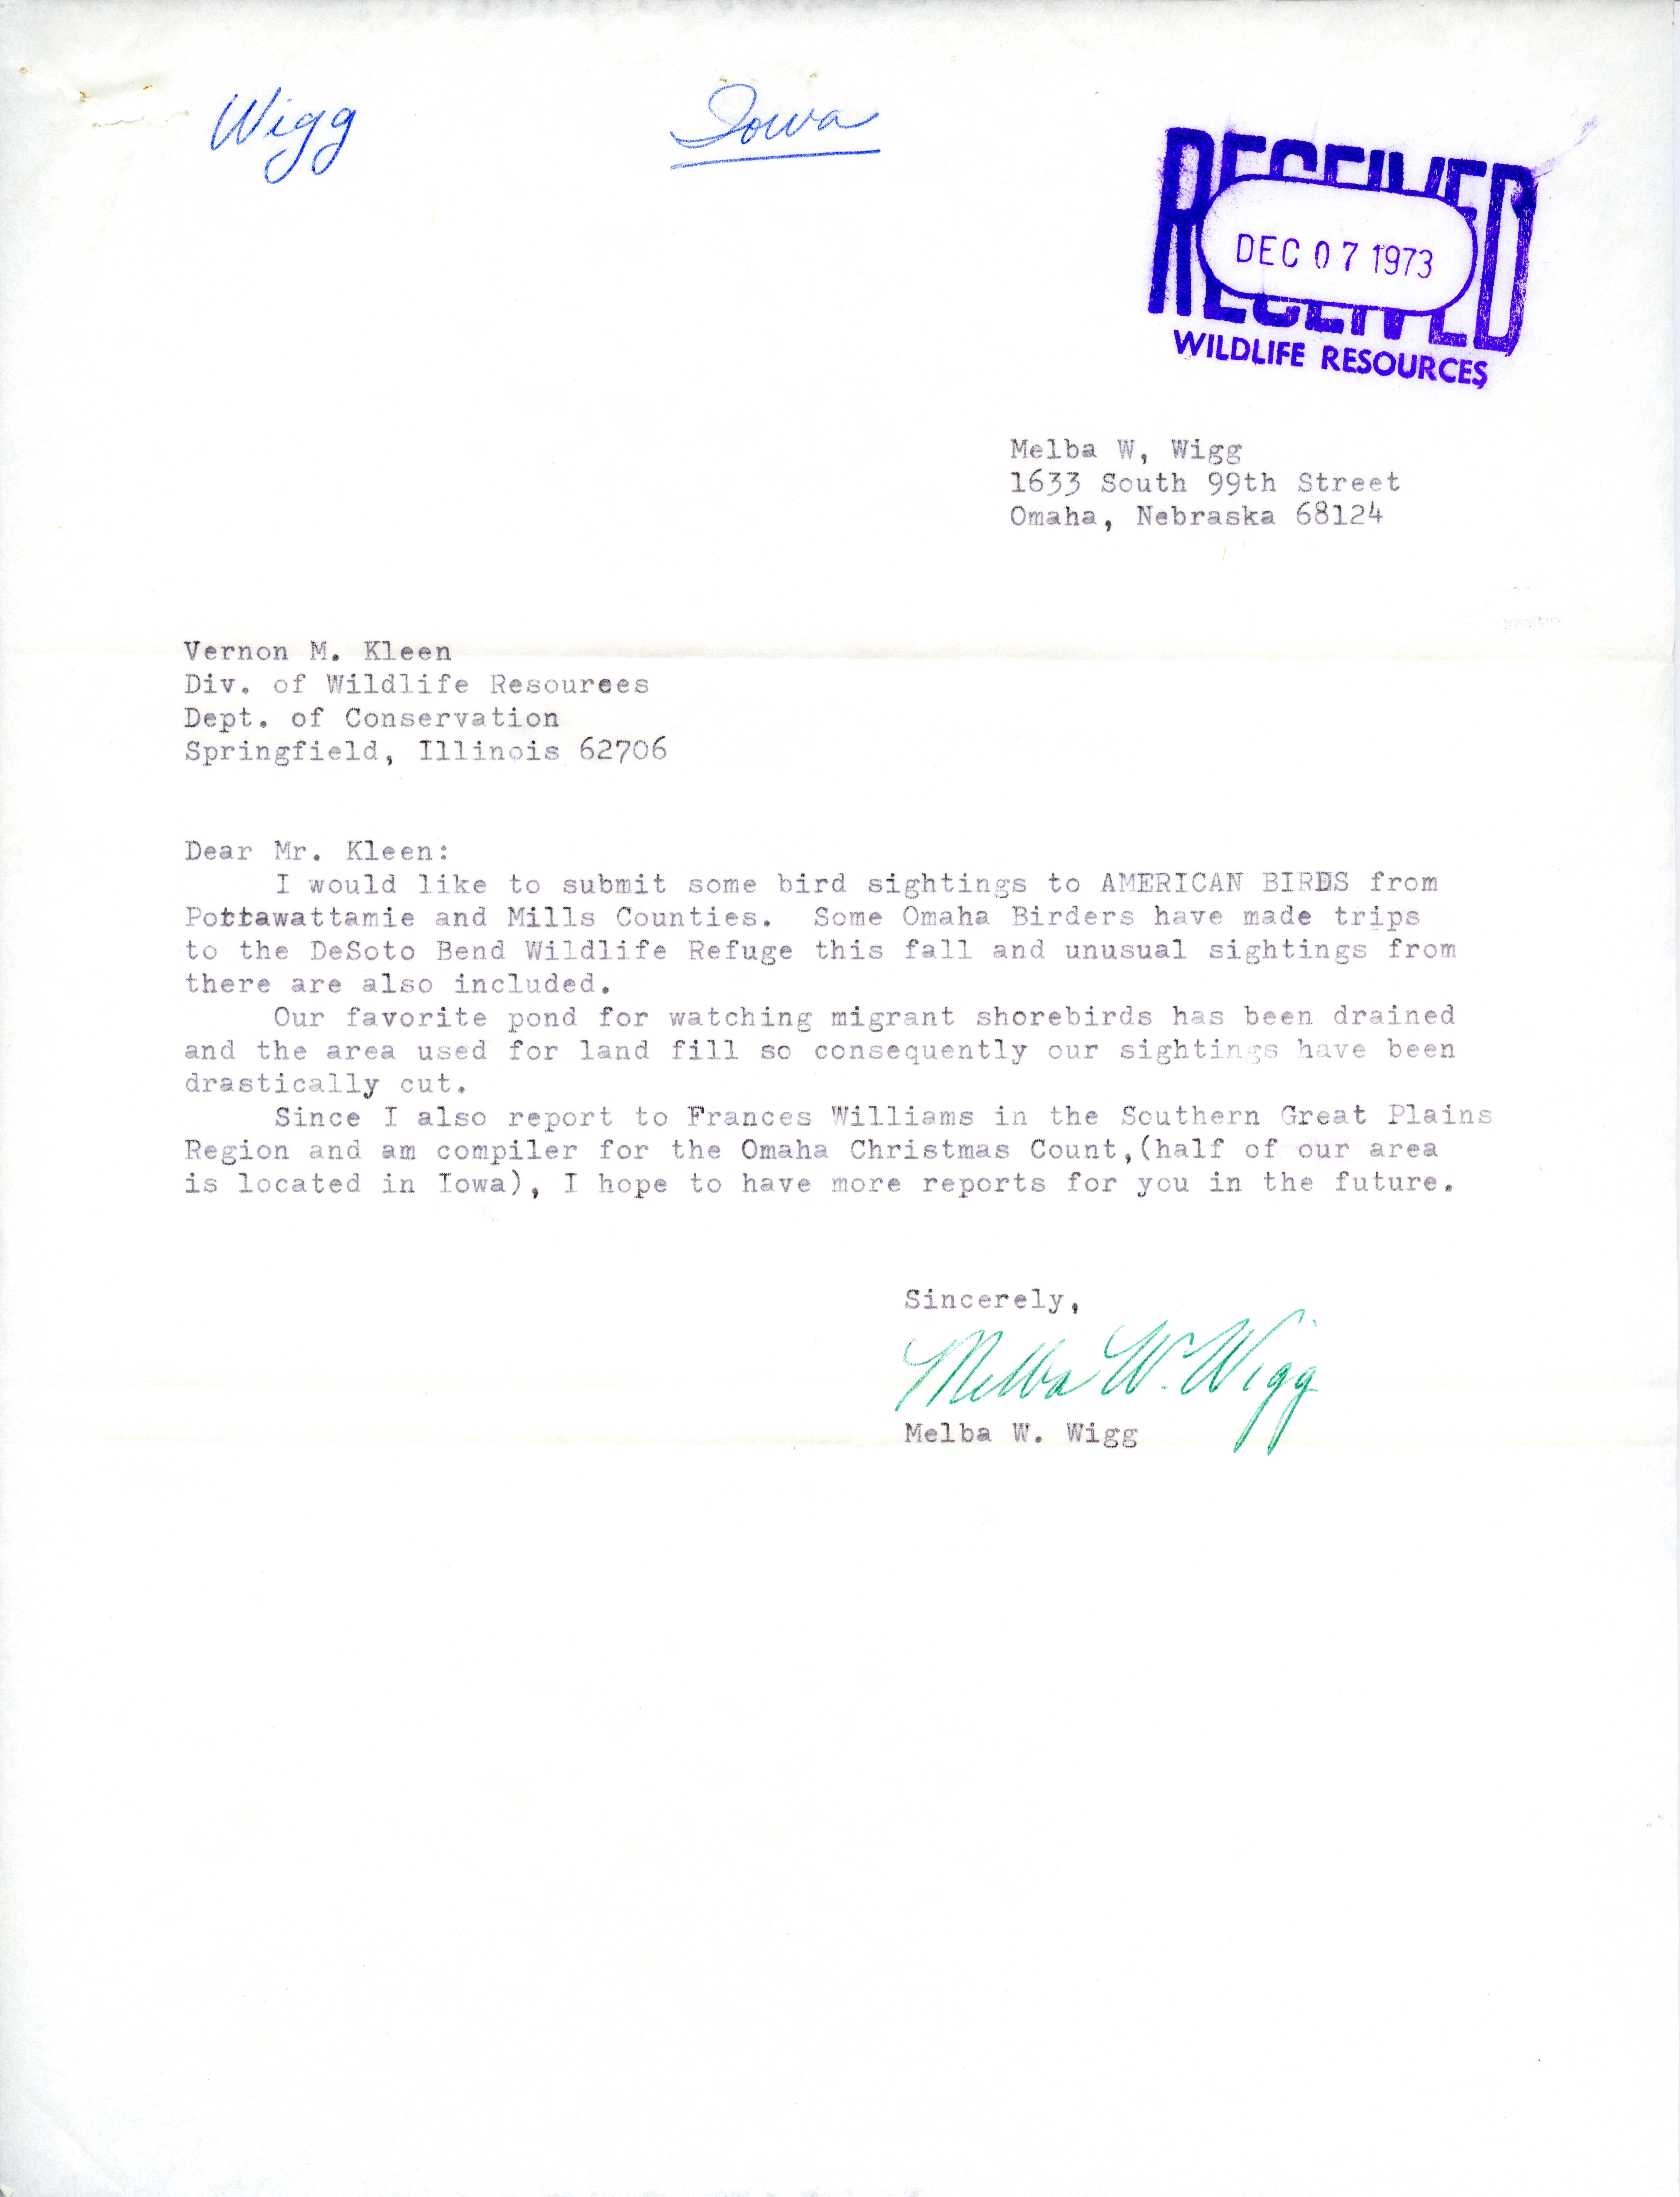 Melba Wigg letter and report to Vernon M. Kleen regarding bird sightings in Pottawattamie and Mills Counties, Iowa, fall 1973